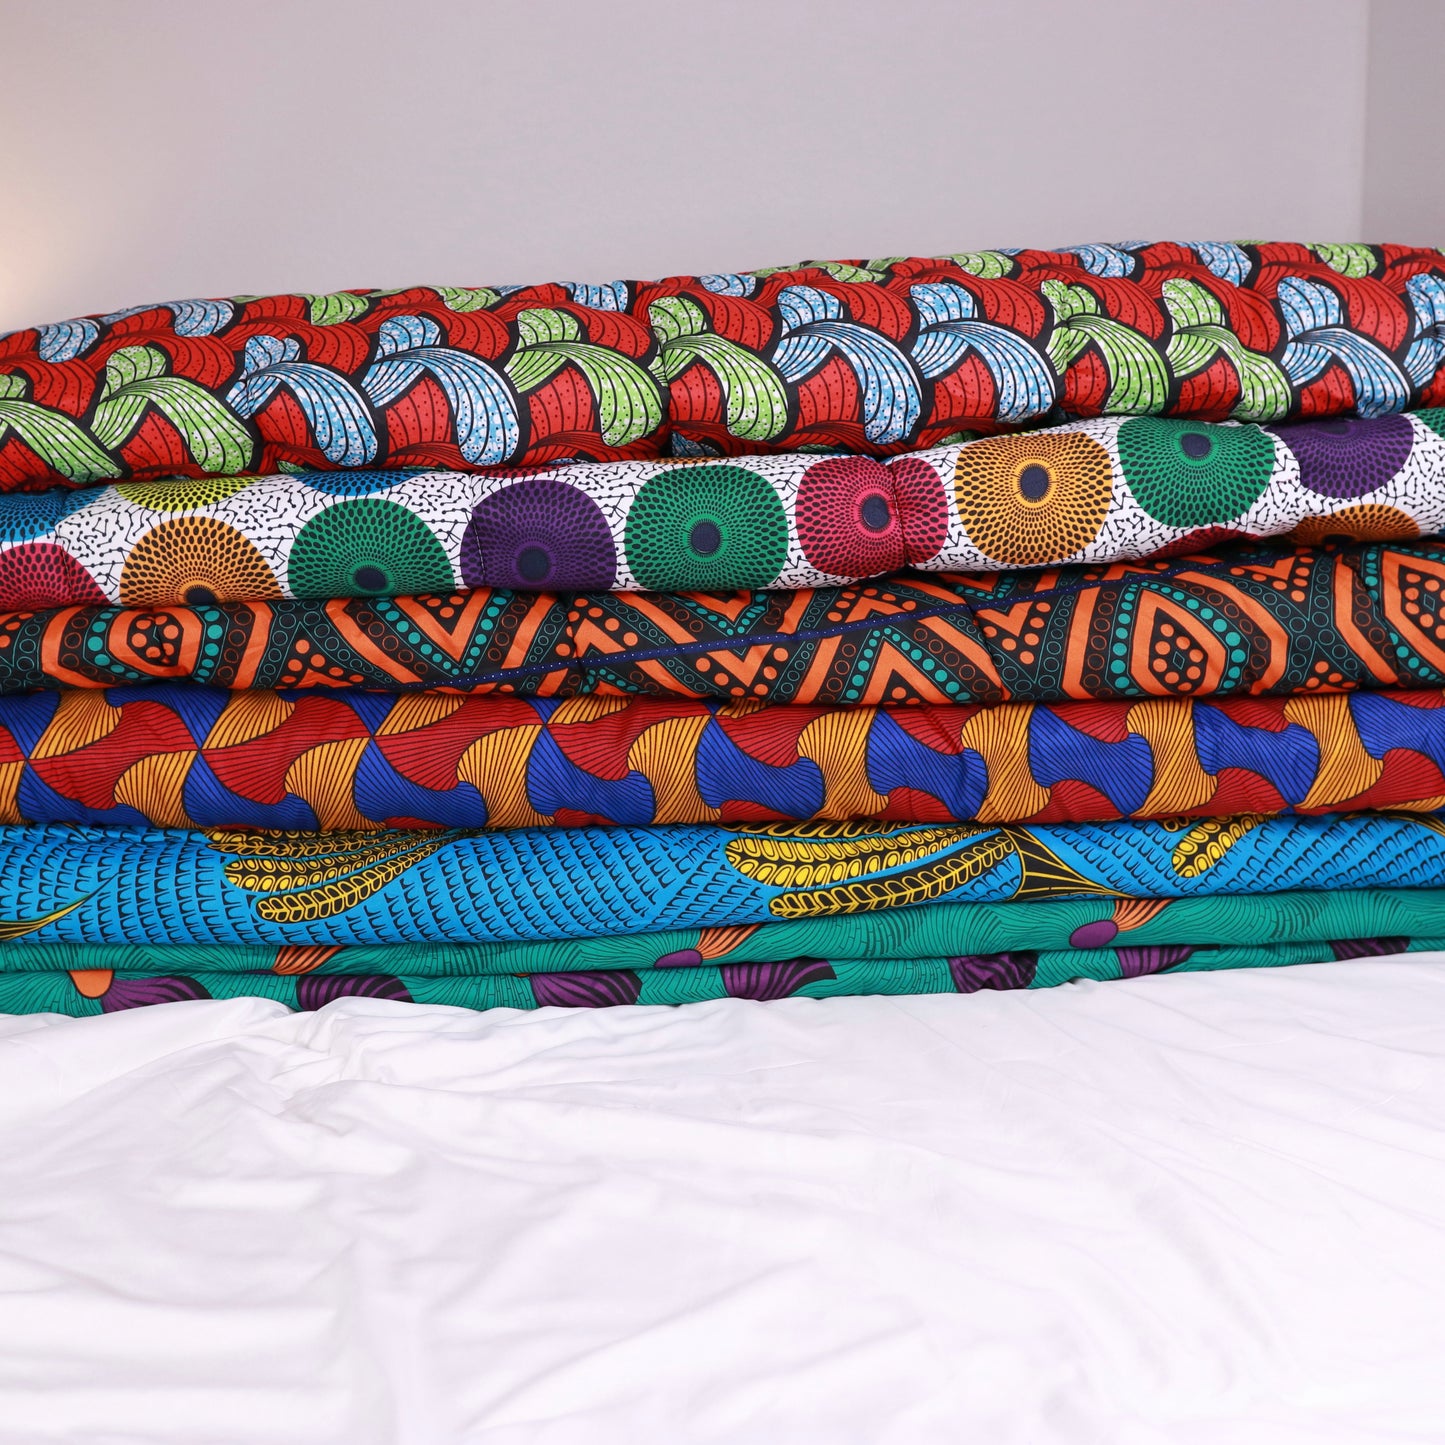 Maasai Mara | Luxury African Print Ankara Goose Down Alternative 100% Cotton Comforter